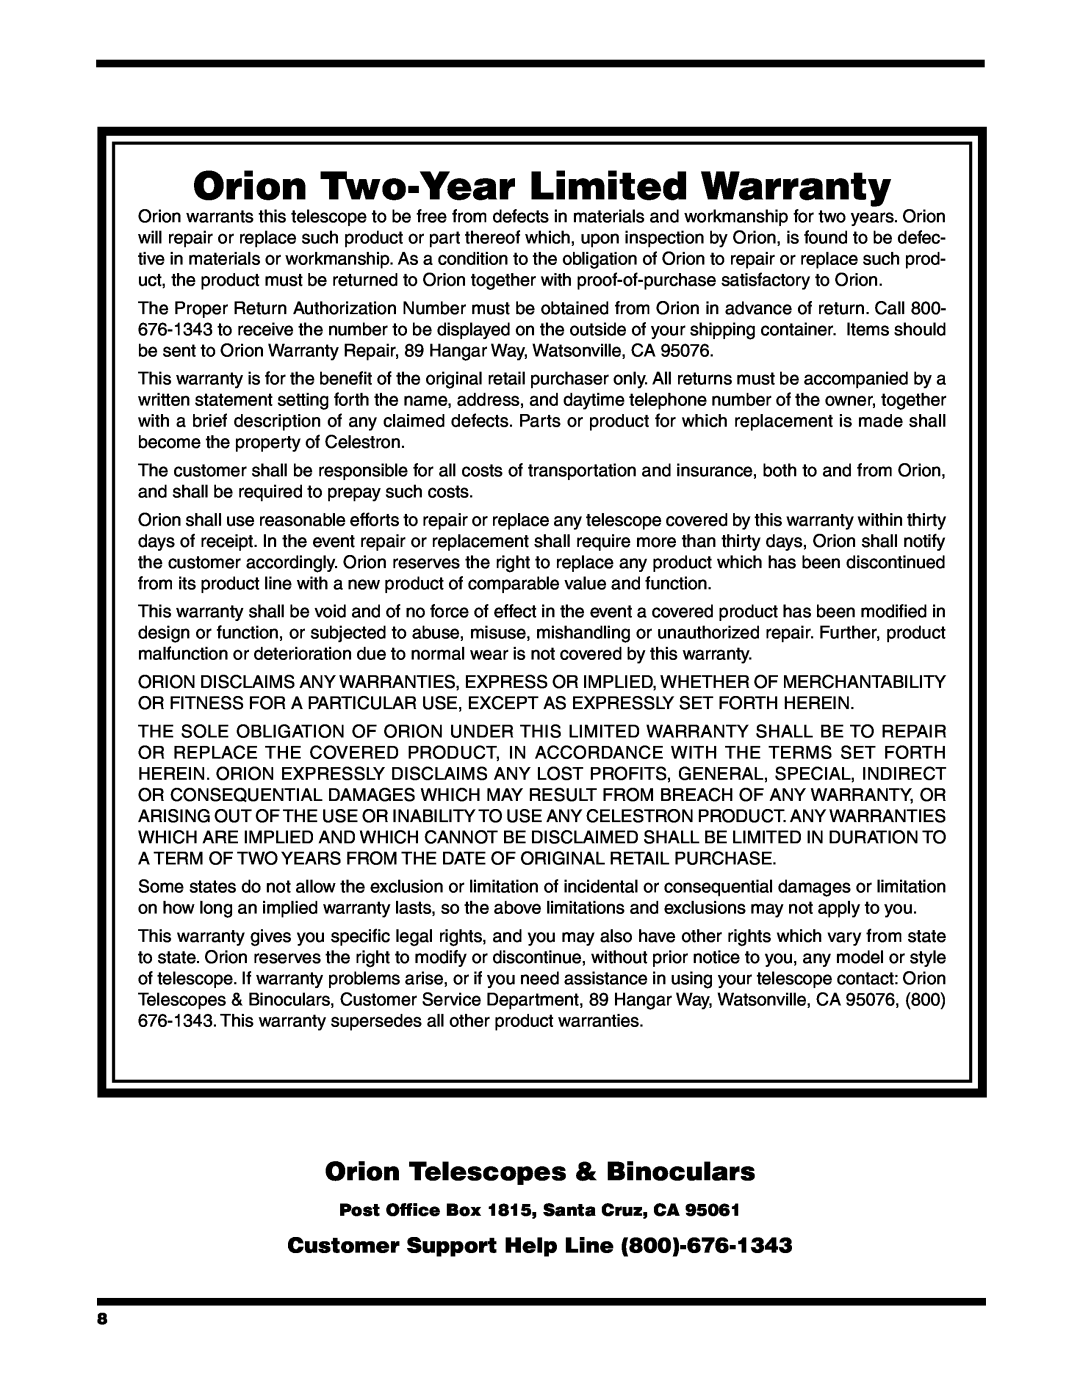 Orion Post Office Box 1815, Santa Cruz, CA, Orion Two-Year Limited Warranty, Orion Telescopes & Binoculars 